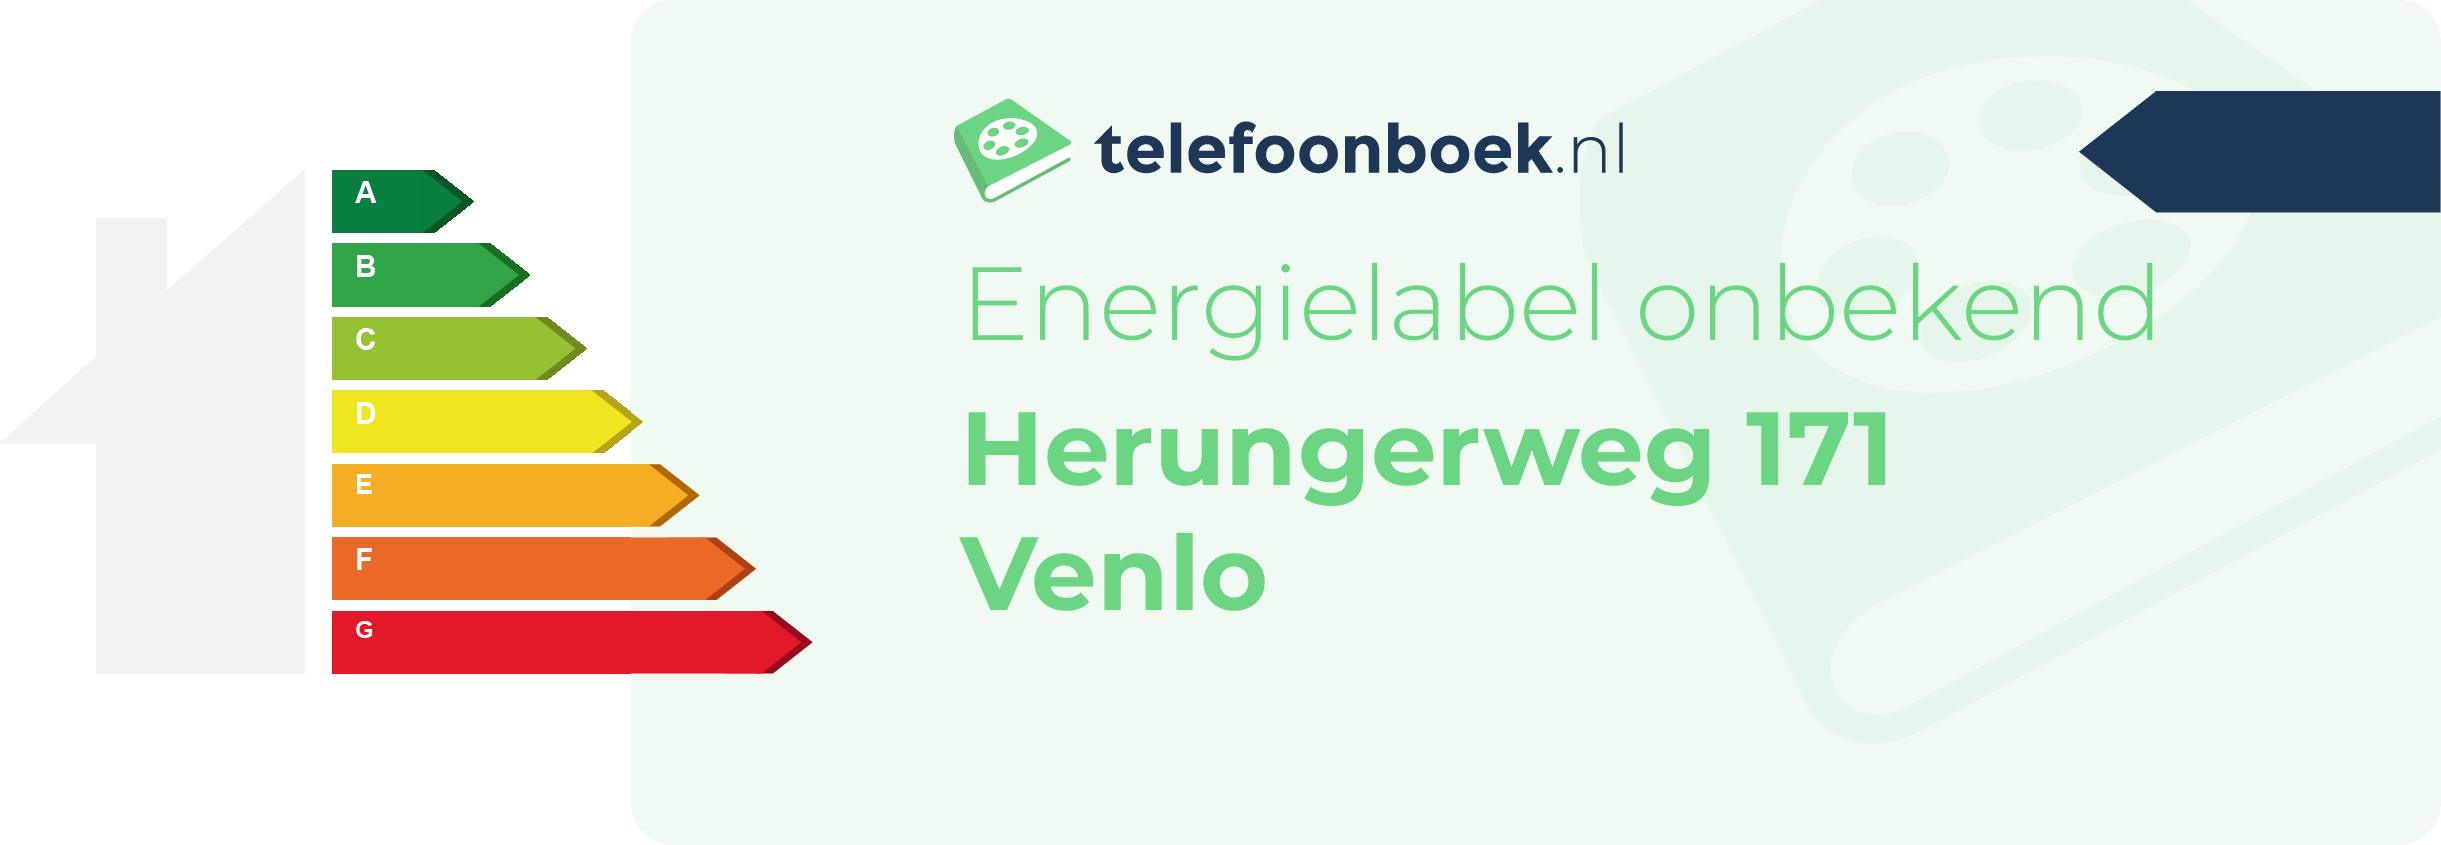 Energielabel Herungerweg 171 Venlo